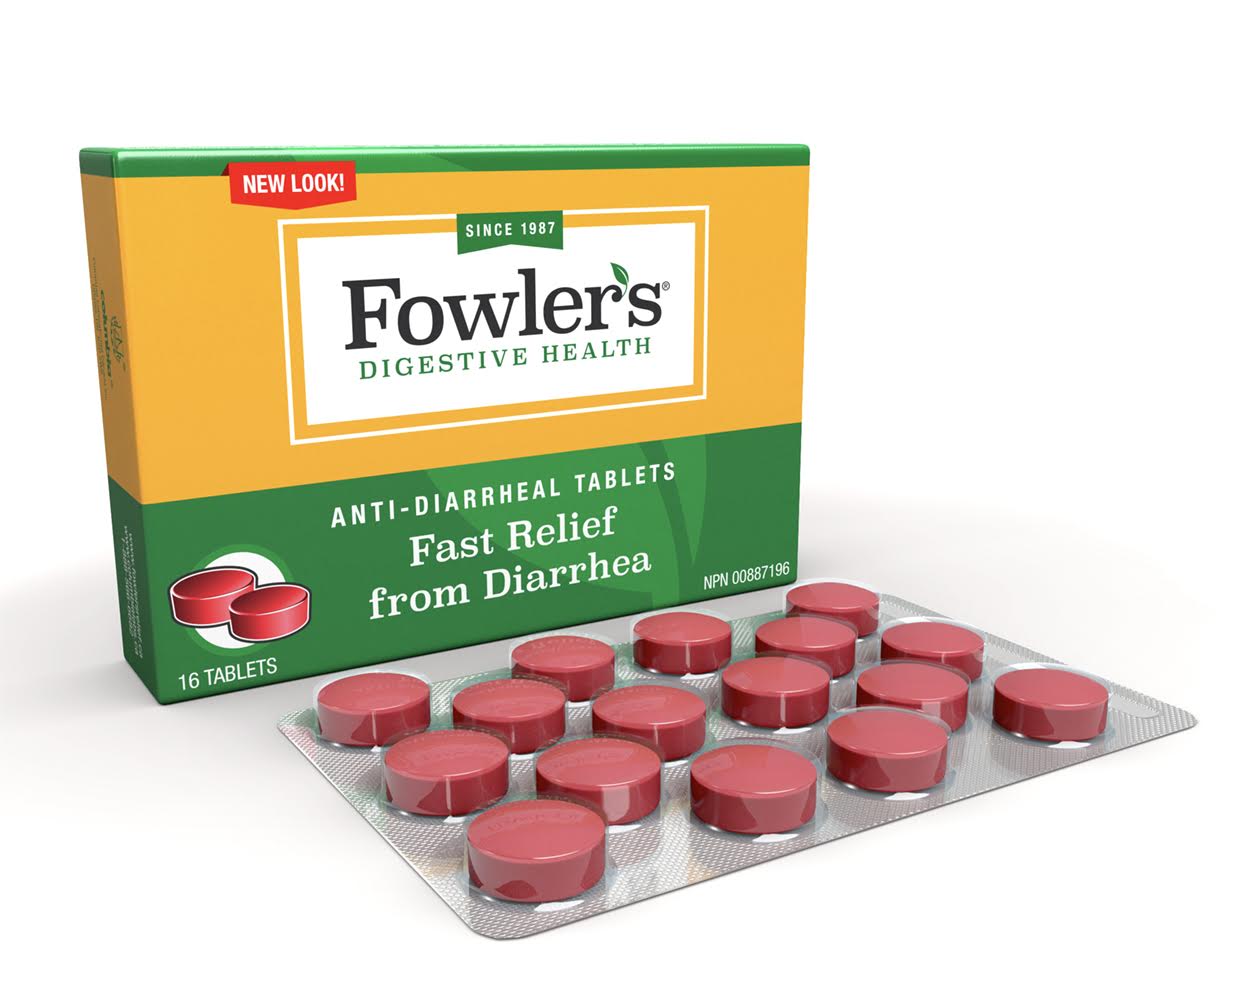 Fowlers Anti-Diarrheal Tablets